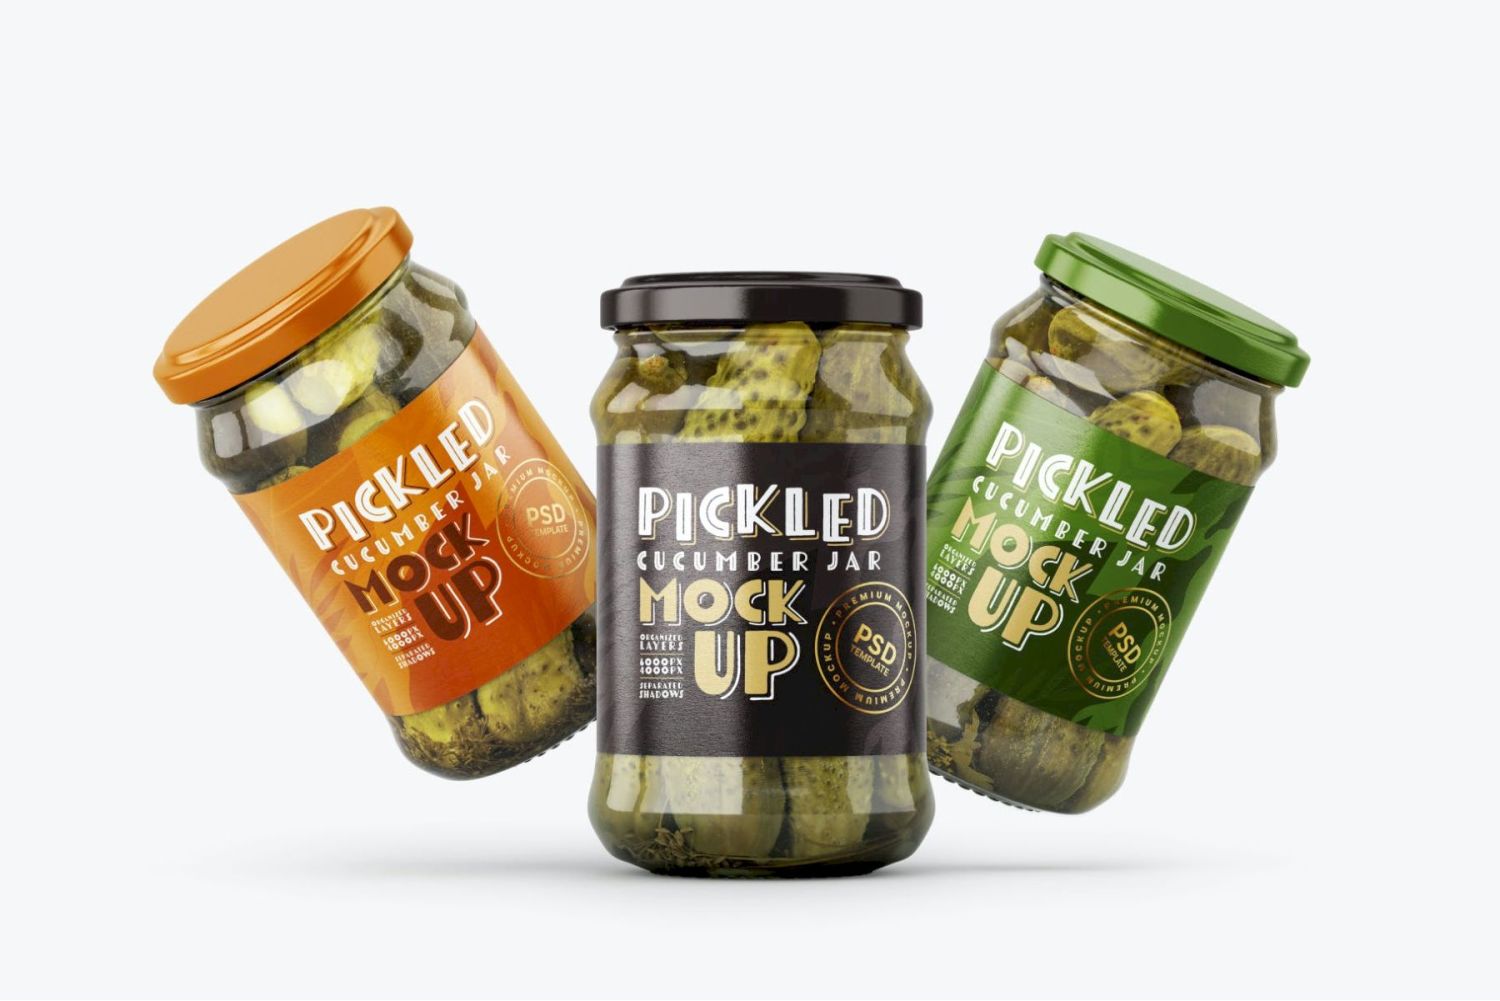 腌黄瓜罐样机套装 Pickled Cucumber Jar Mockup Set插图8